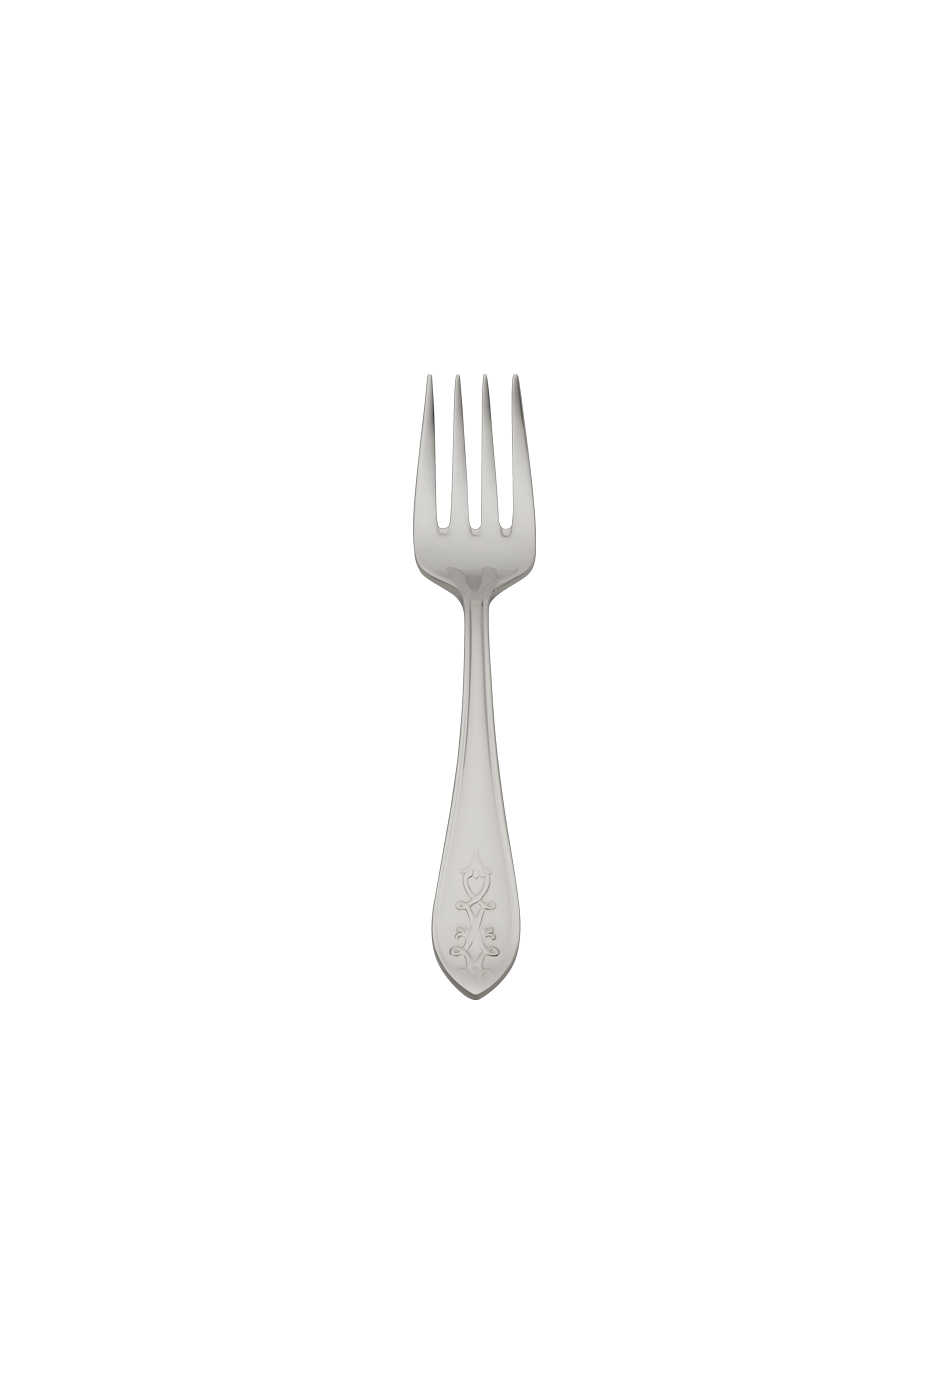 Jardin Children's Fork (18/8 stainless steel)